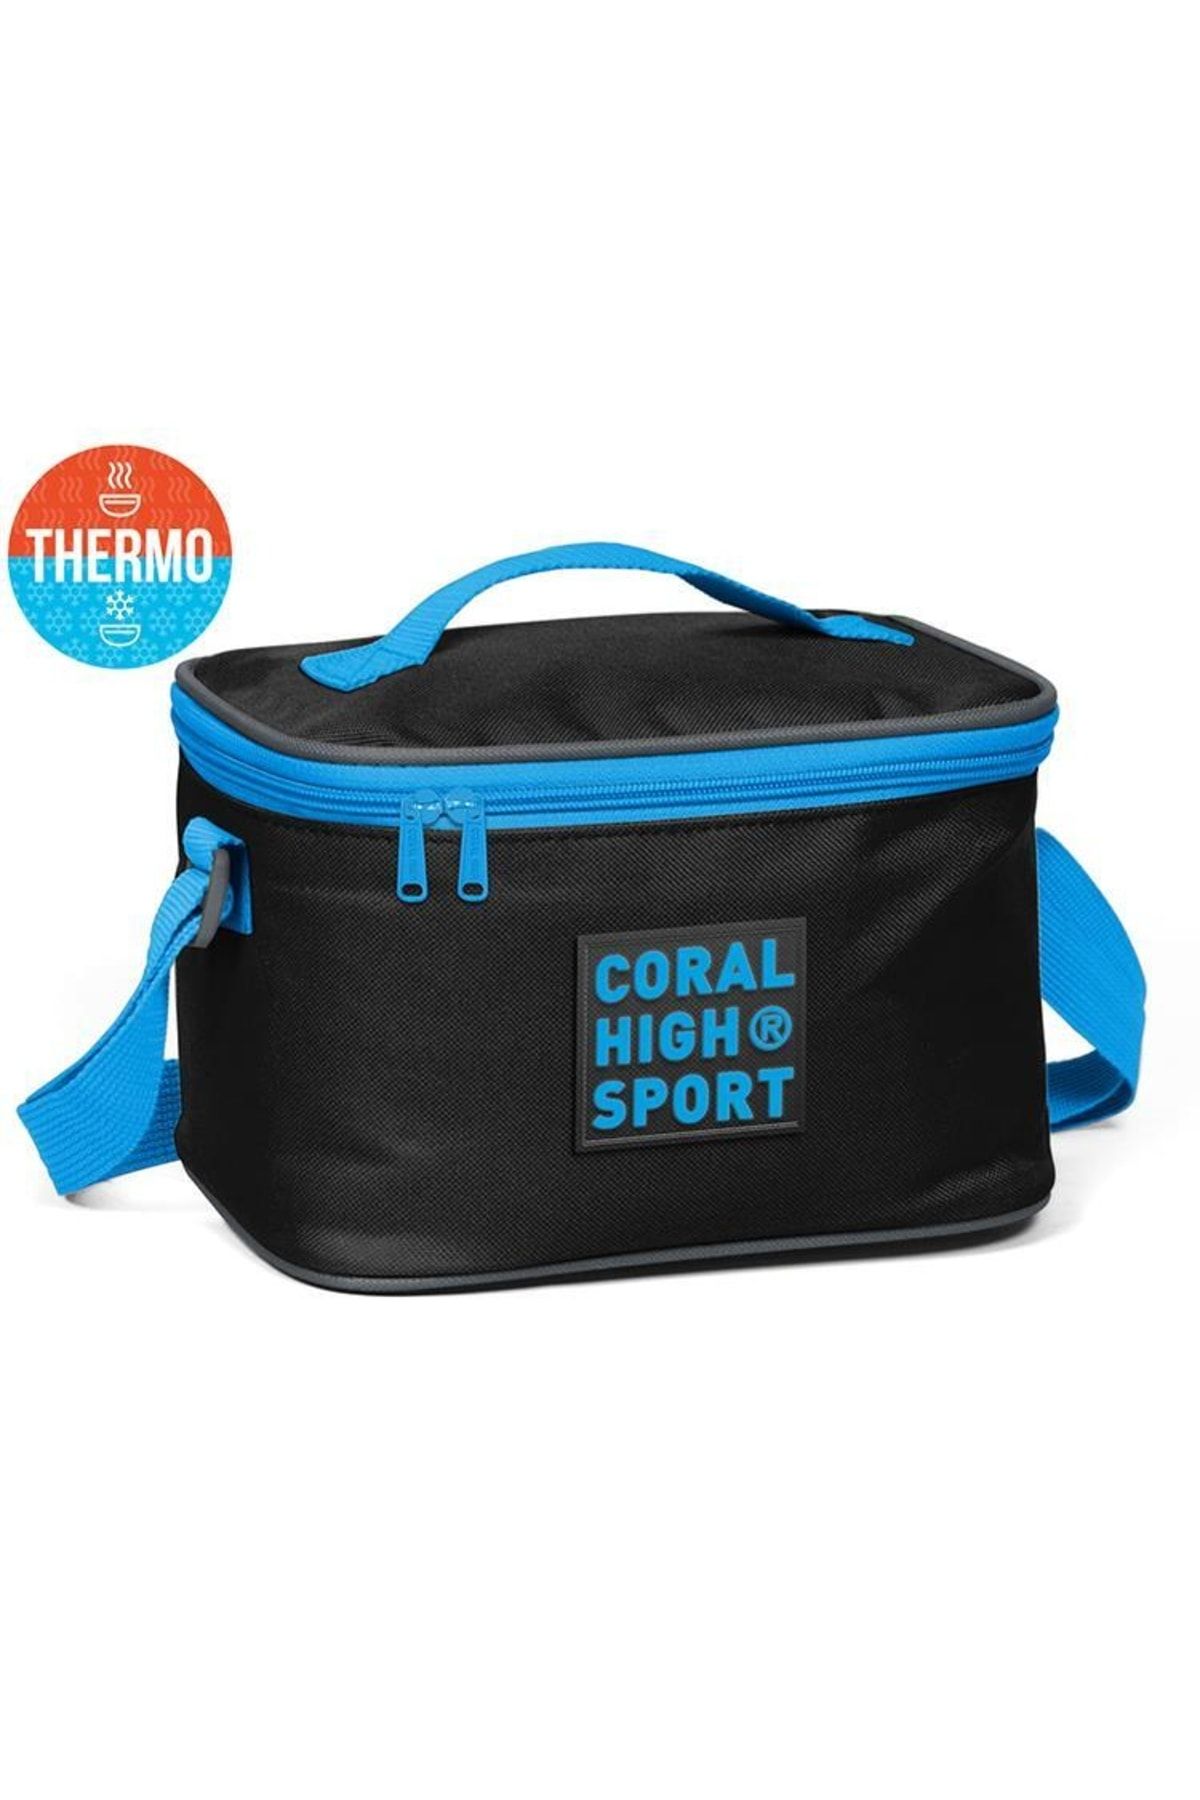 Coral High Sport Siyah Gri Thermo Beslenme Çantası